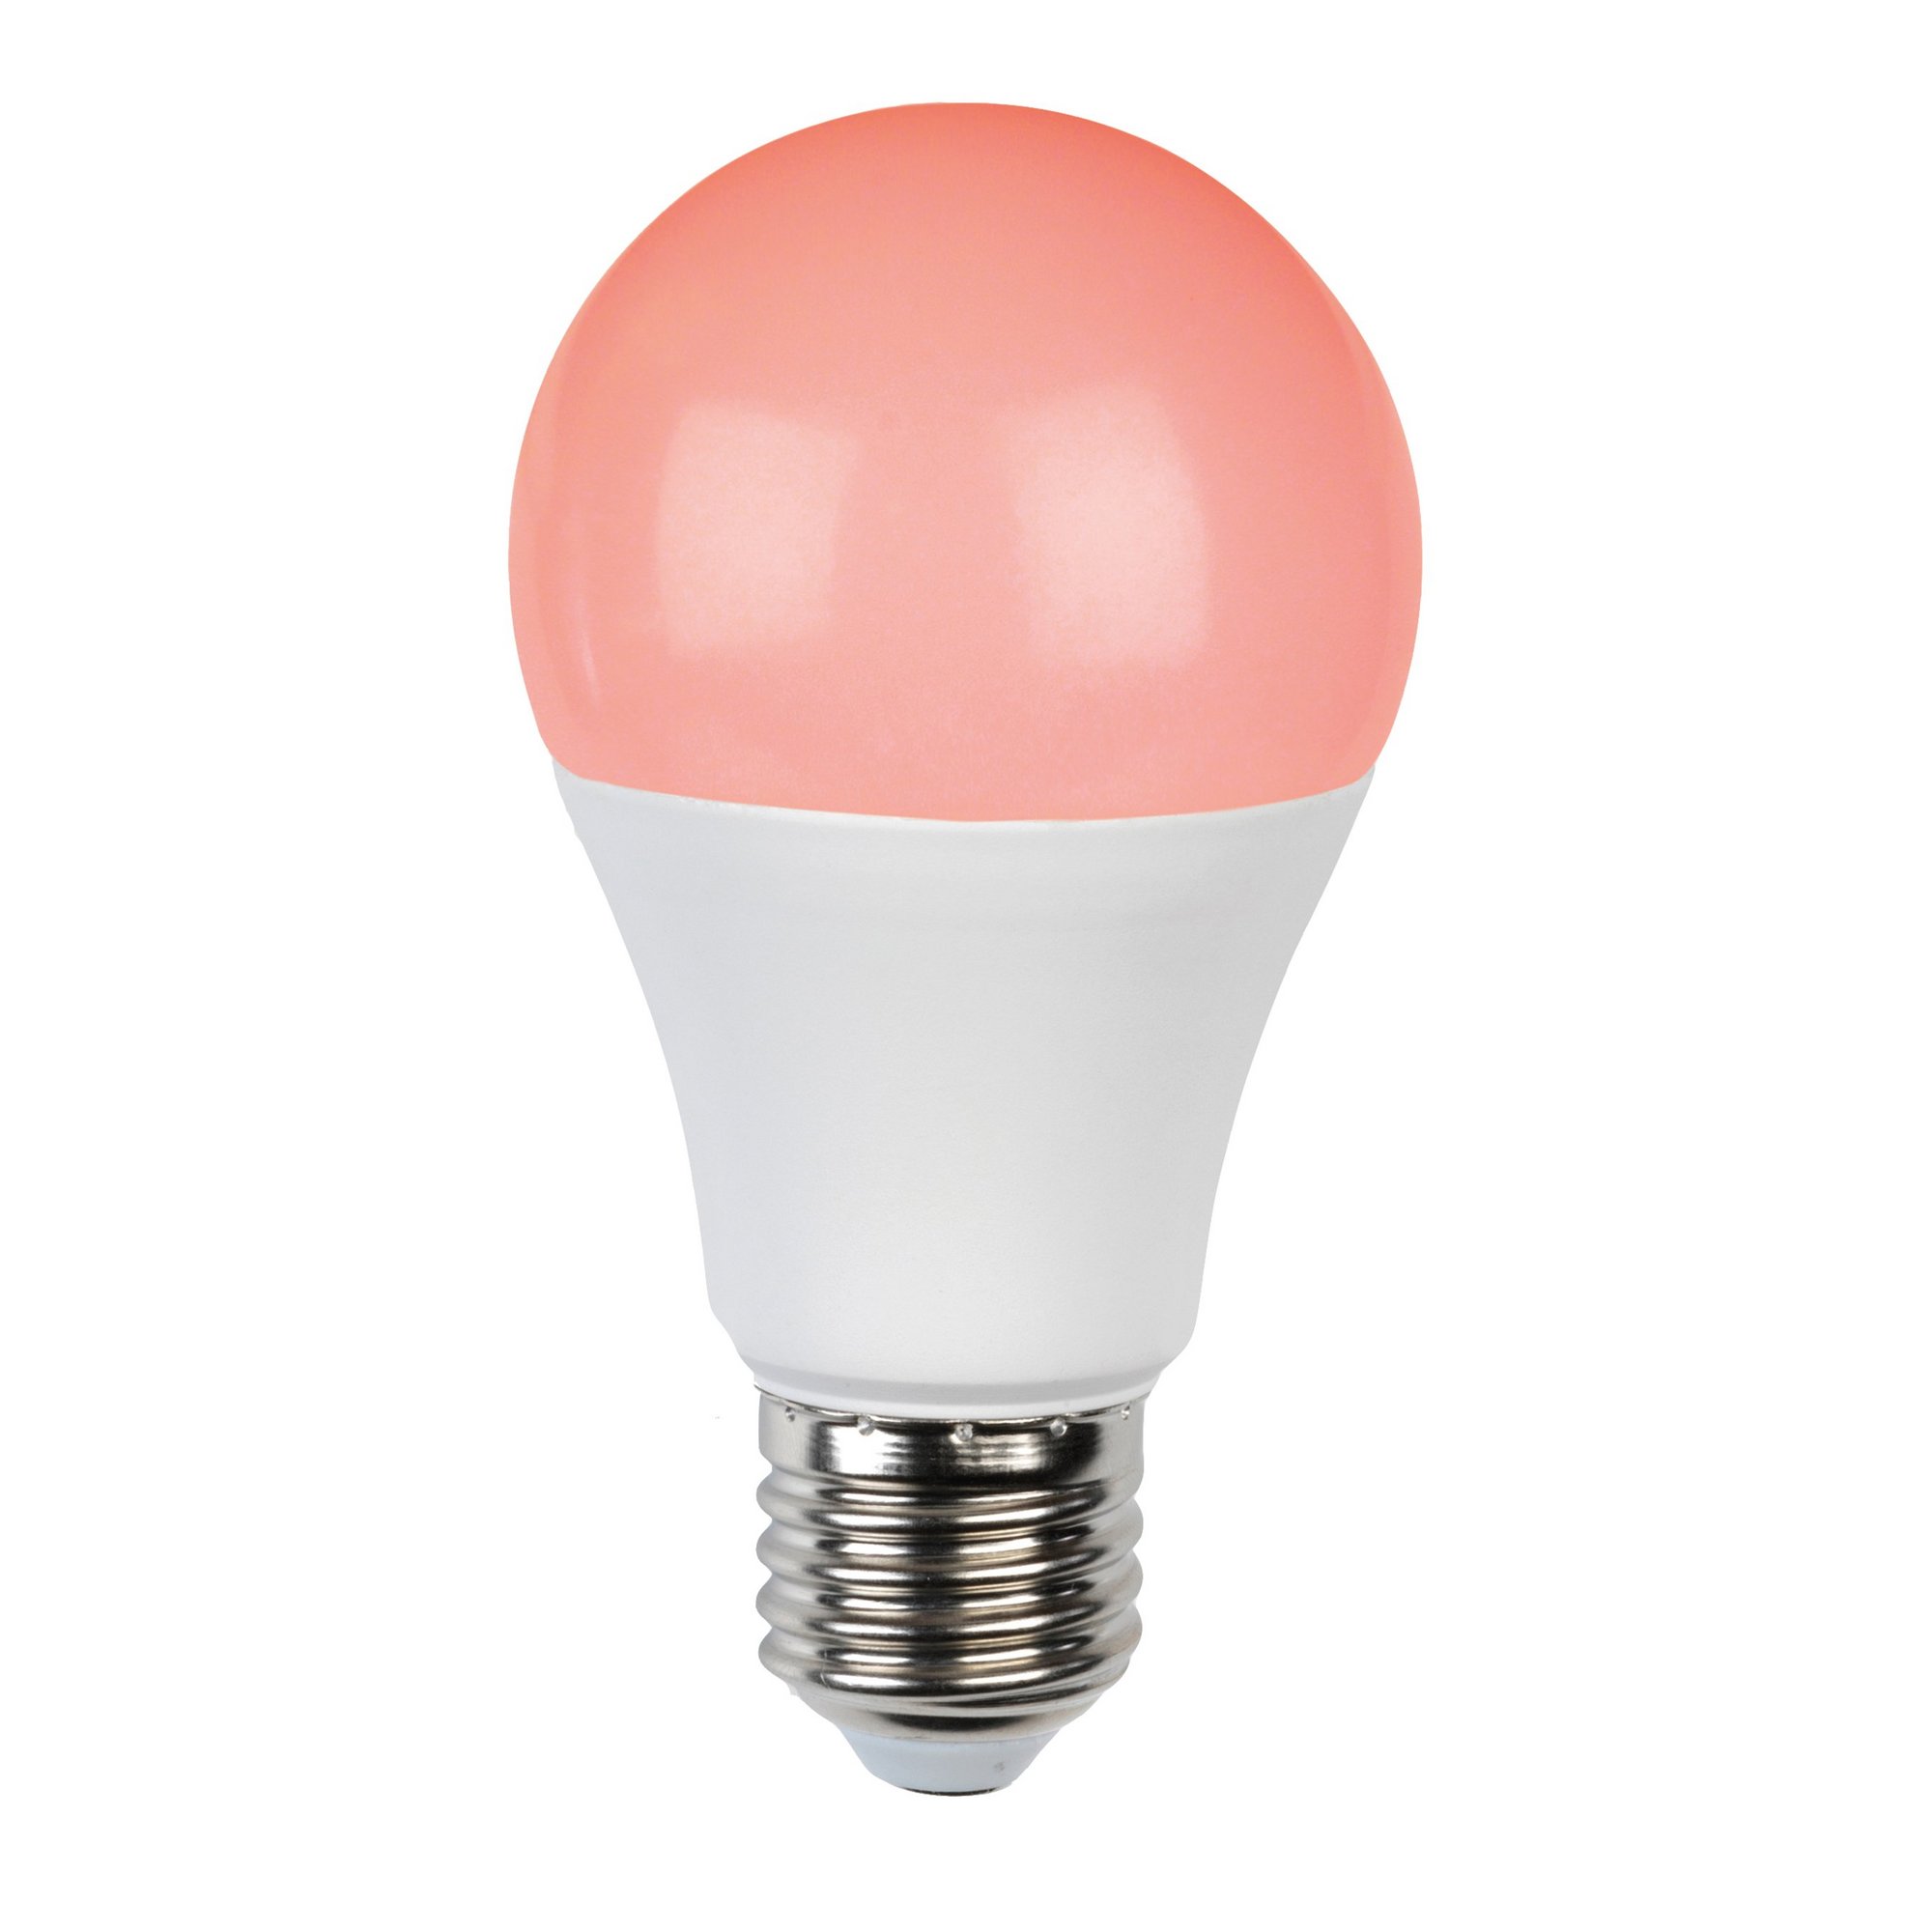 Intempo Intempo Home Smart Light Bulb - E27 | 